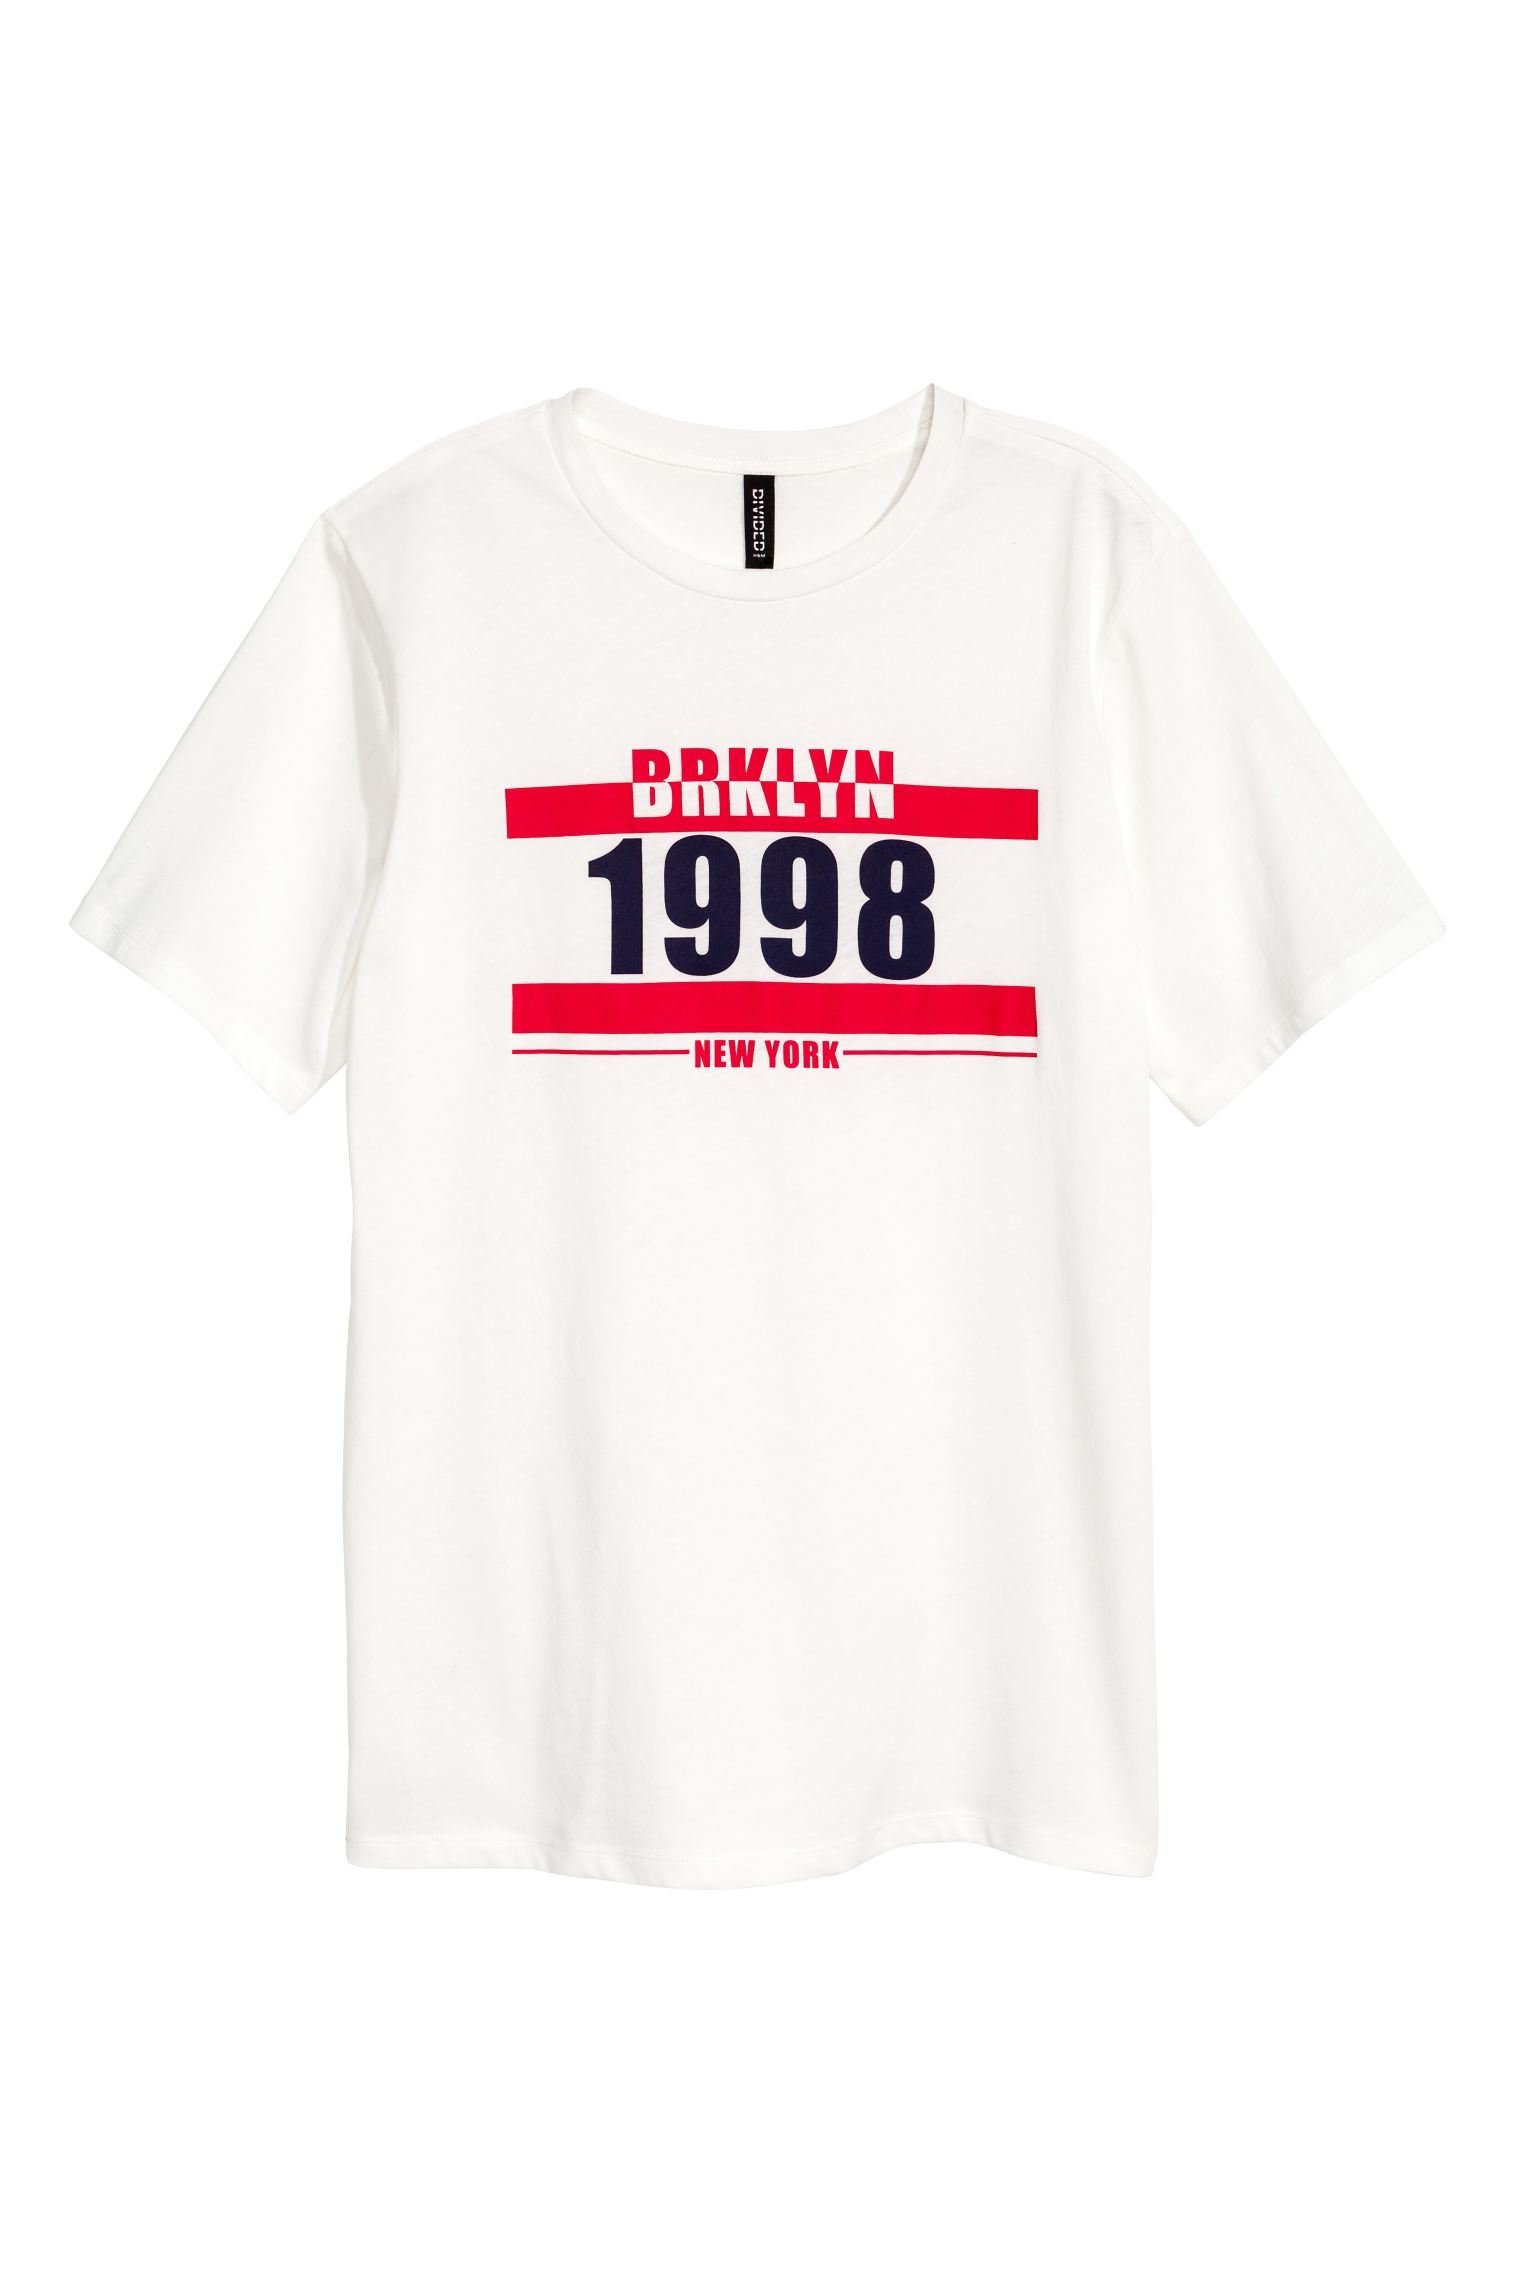 H&M+Brklyn+1998+Printed+T-Shirt.jpg